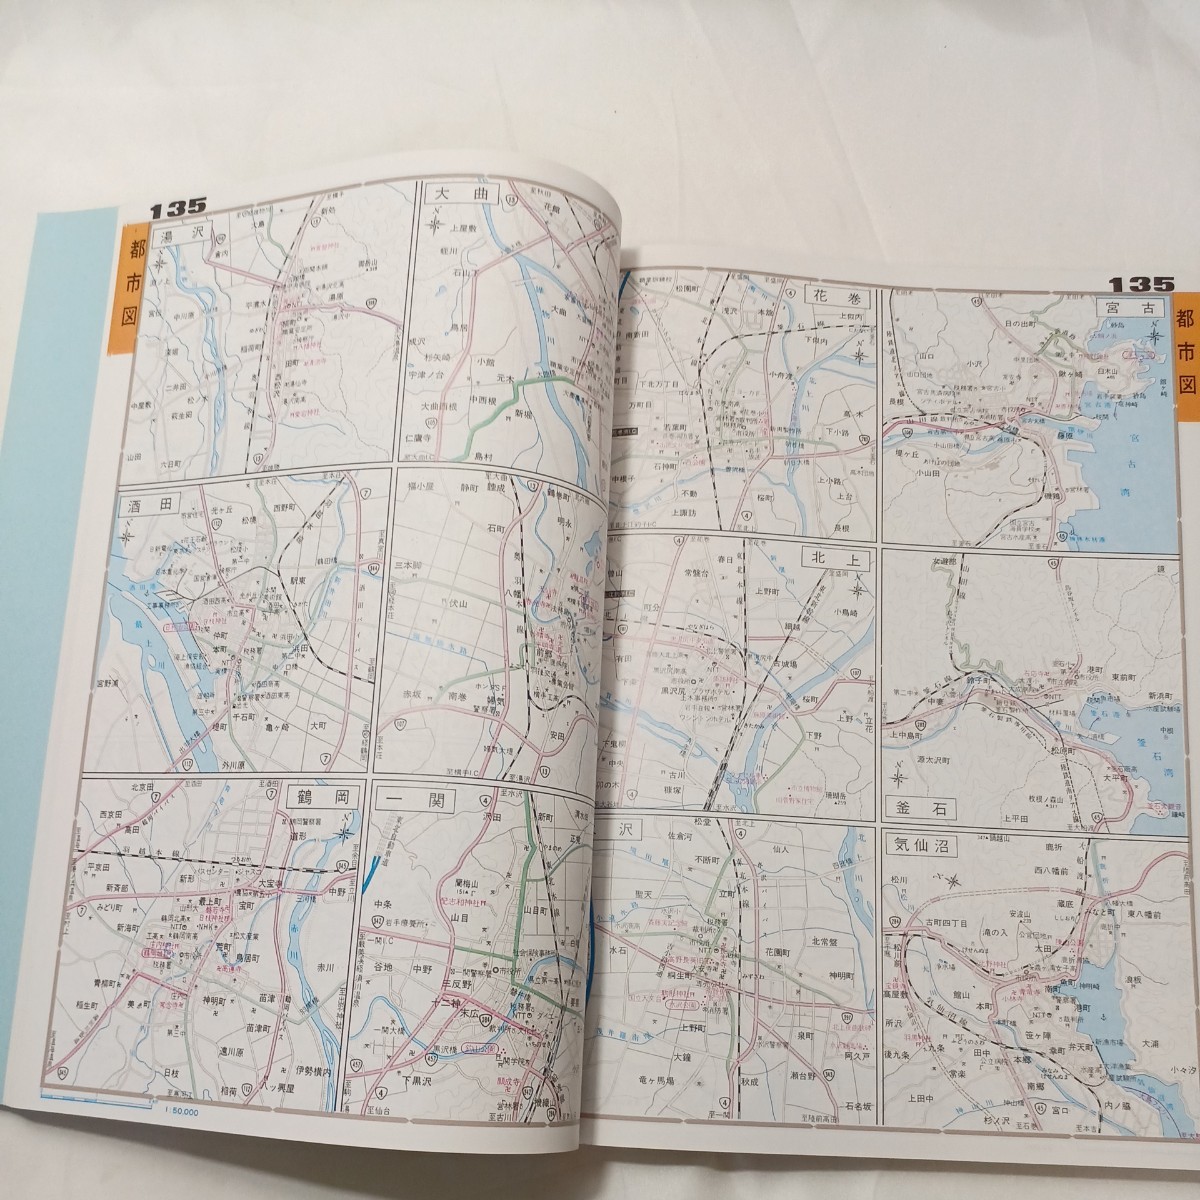 zaa-503♪ワイド全国版道路地図 (ルチエールワイド道路地図) 日地出版株式会社 (著) 1993年_画像8